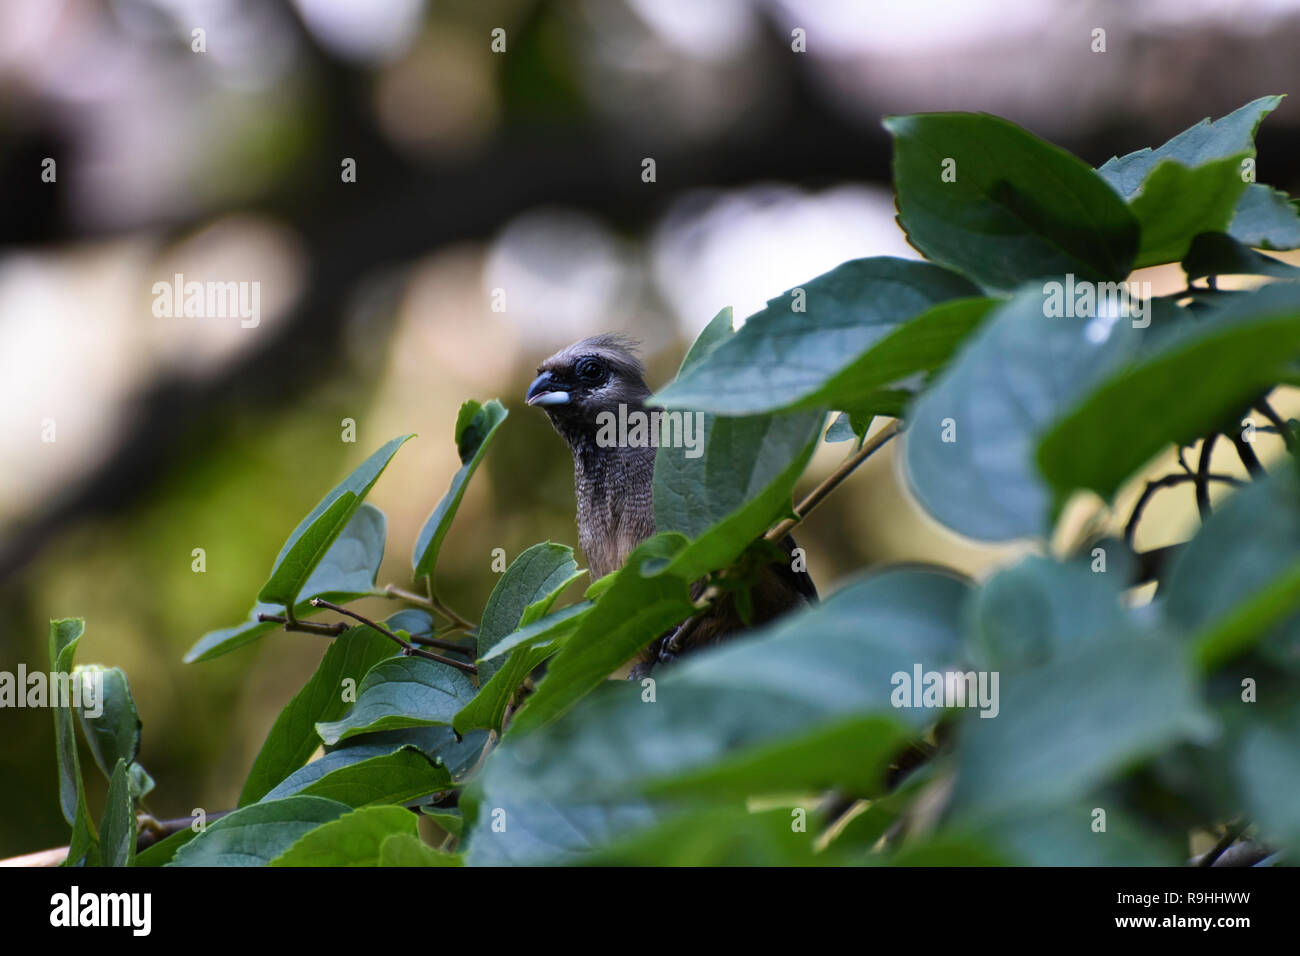 Curious Speckled Mousebird (colius striatus) Peeking Over Leaves Stock Photo